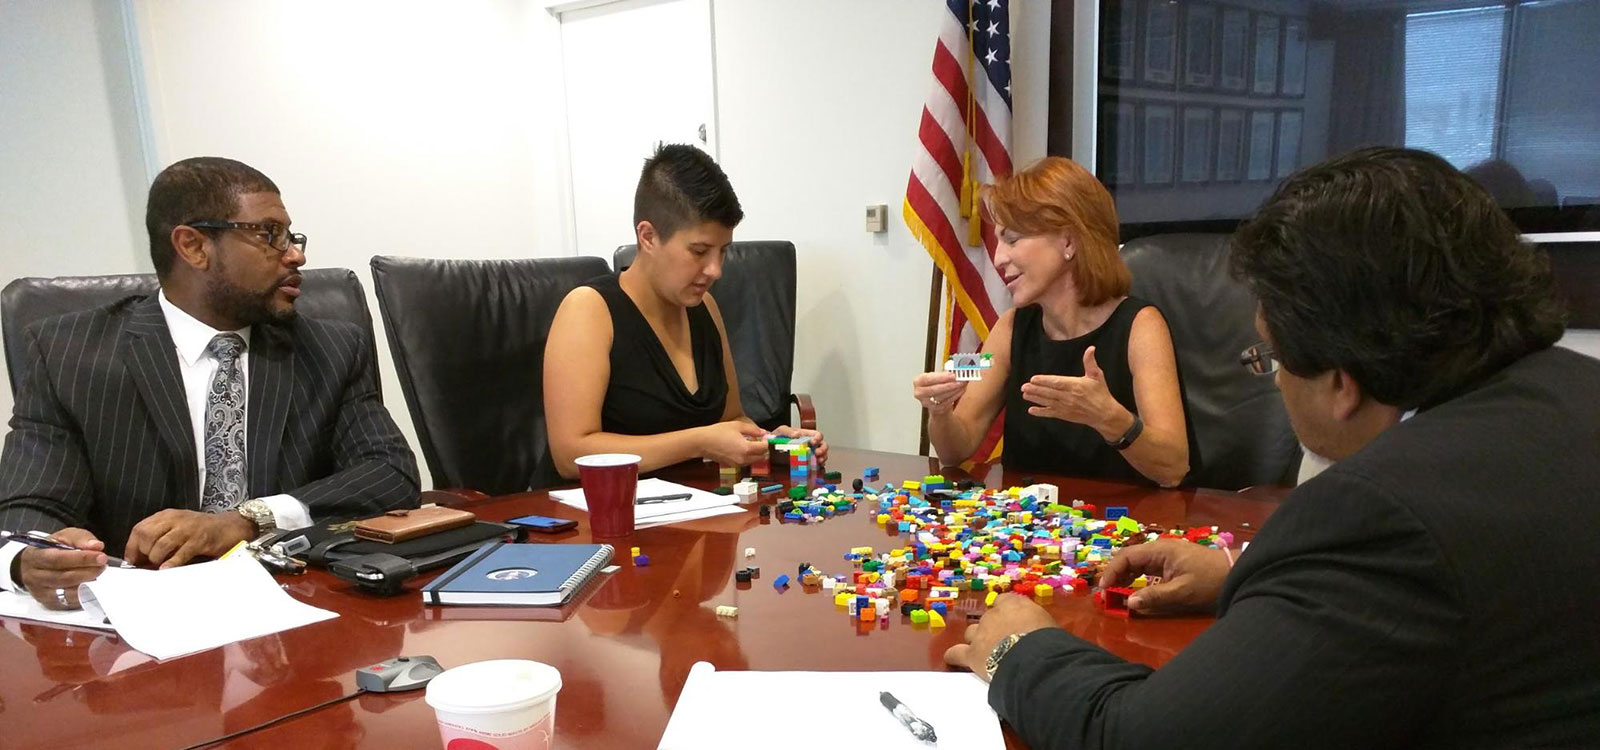 SBA executives prepare to build with Legos.